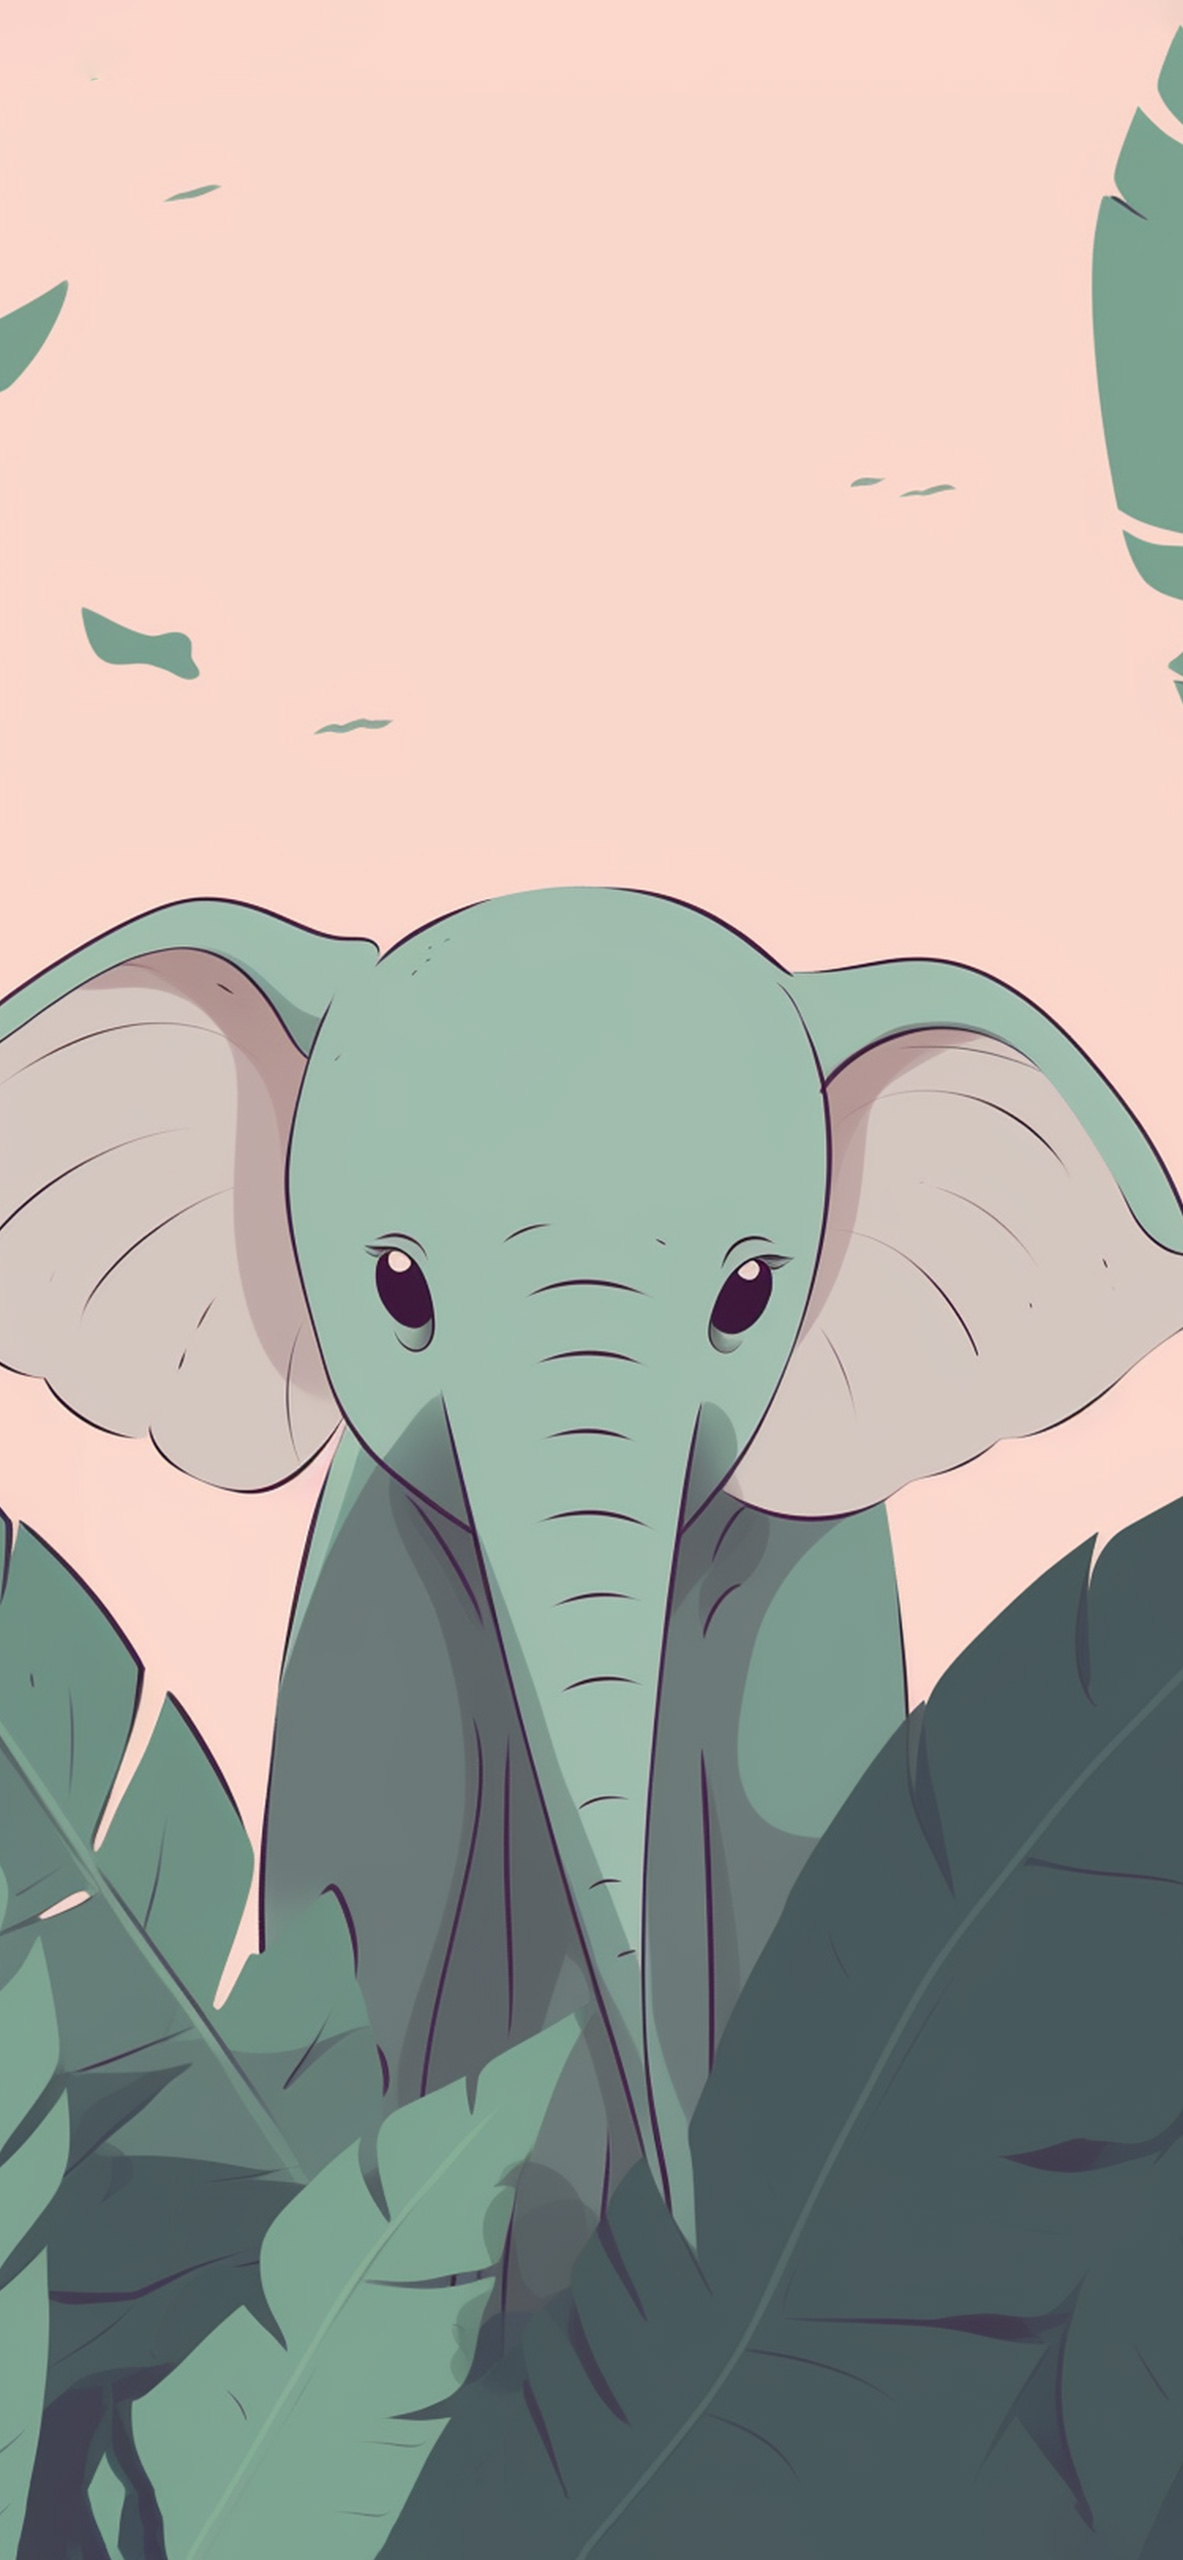 baby elephant wallpaper